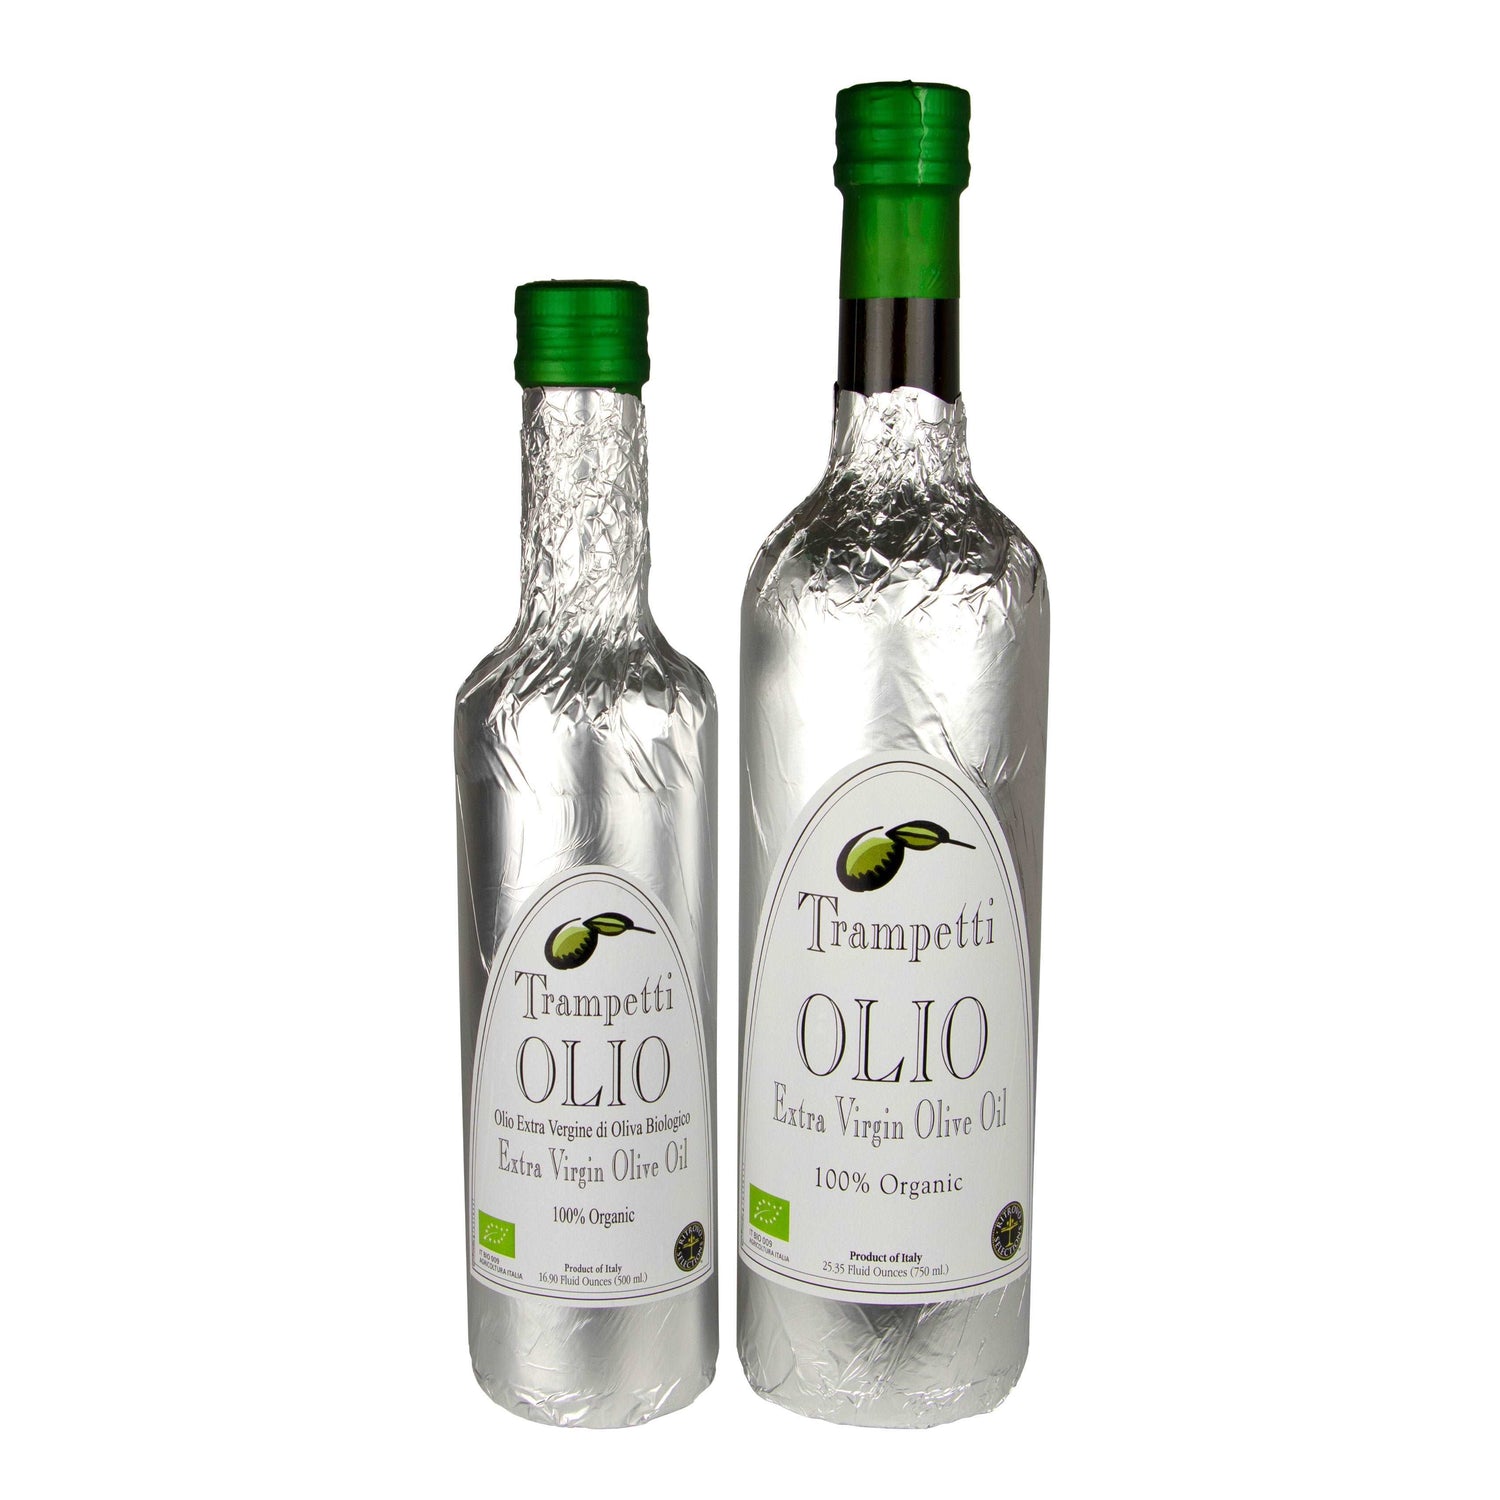 Trampetti Organic Umbrian Extra Virgin Olive Oil 500 ml